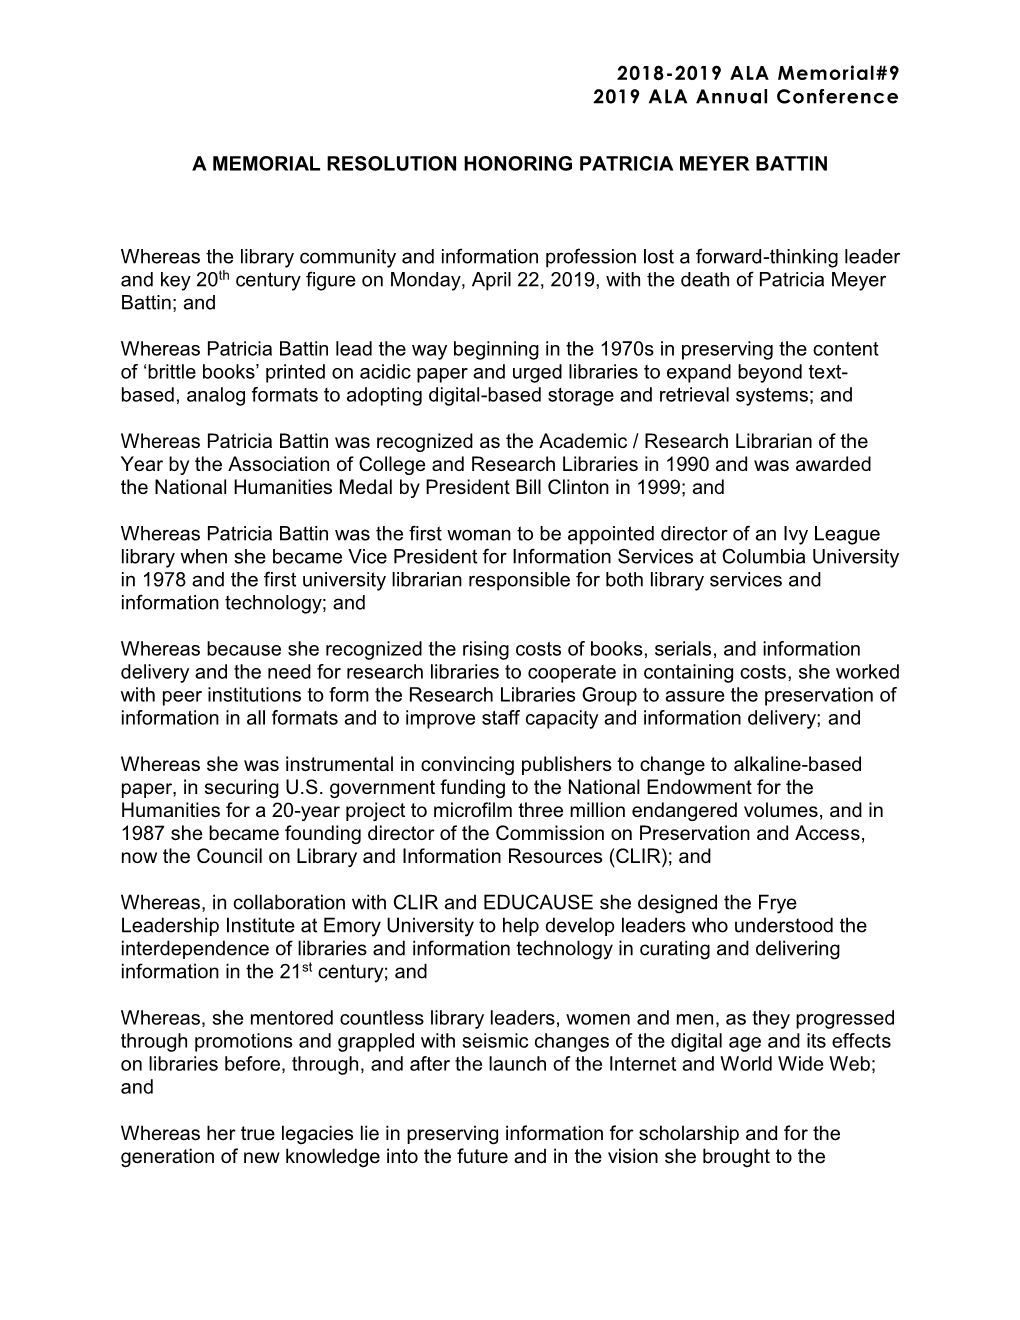 A Memorial Resolution Honoring Patricia Meyer Battin